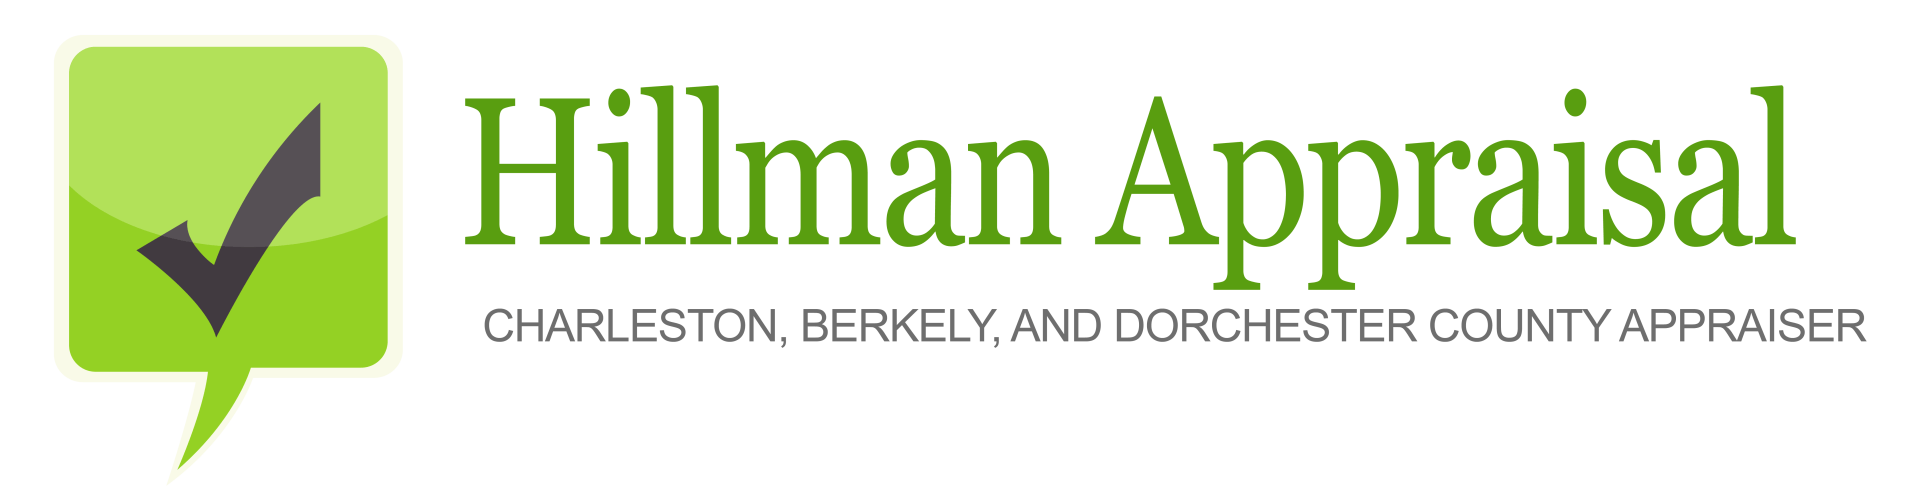 Hillman Appraisal Logo